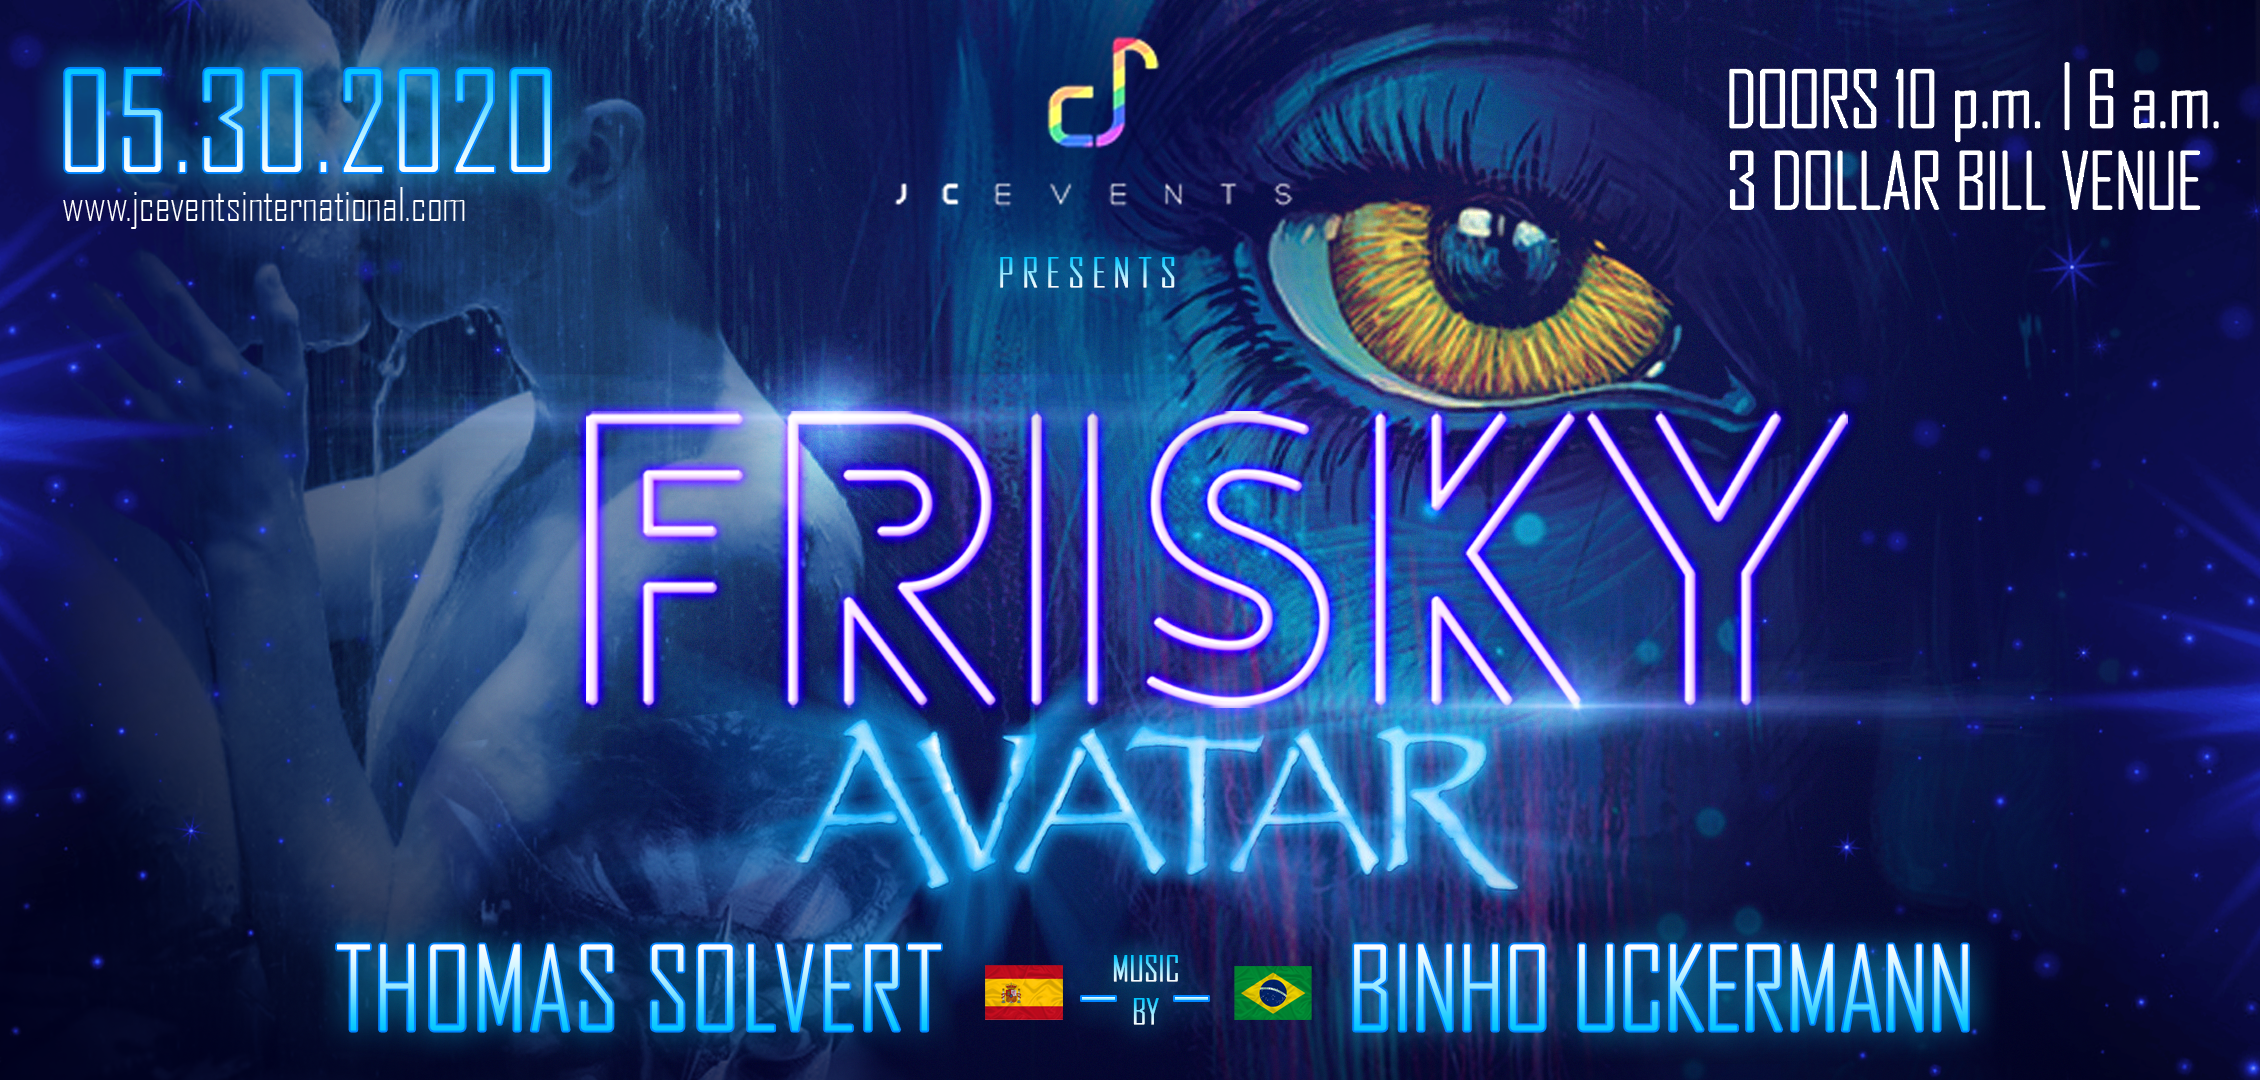 FRISKY - Avatar